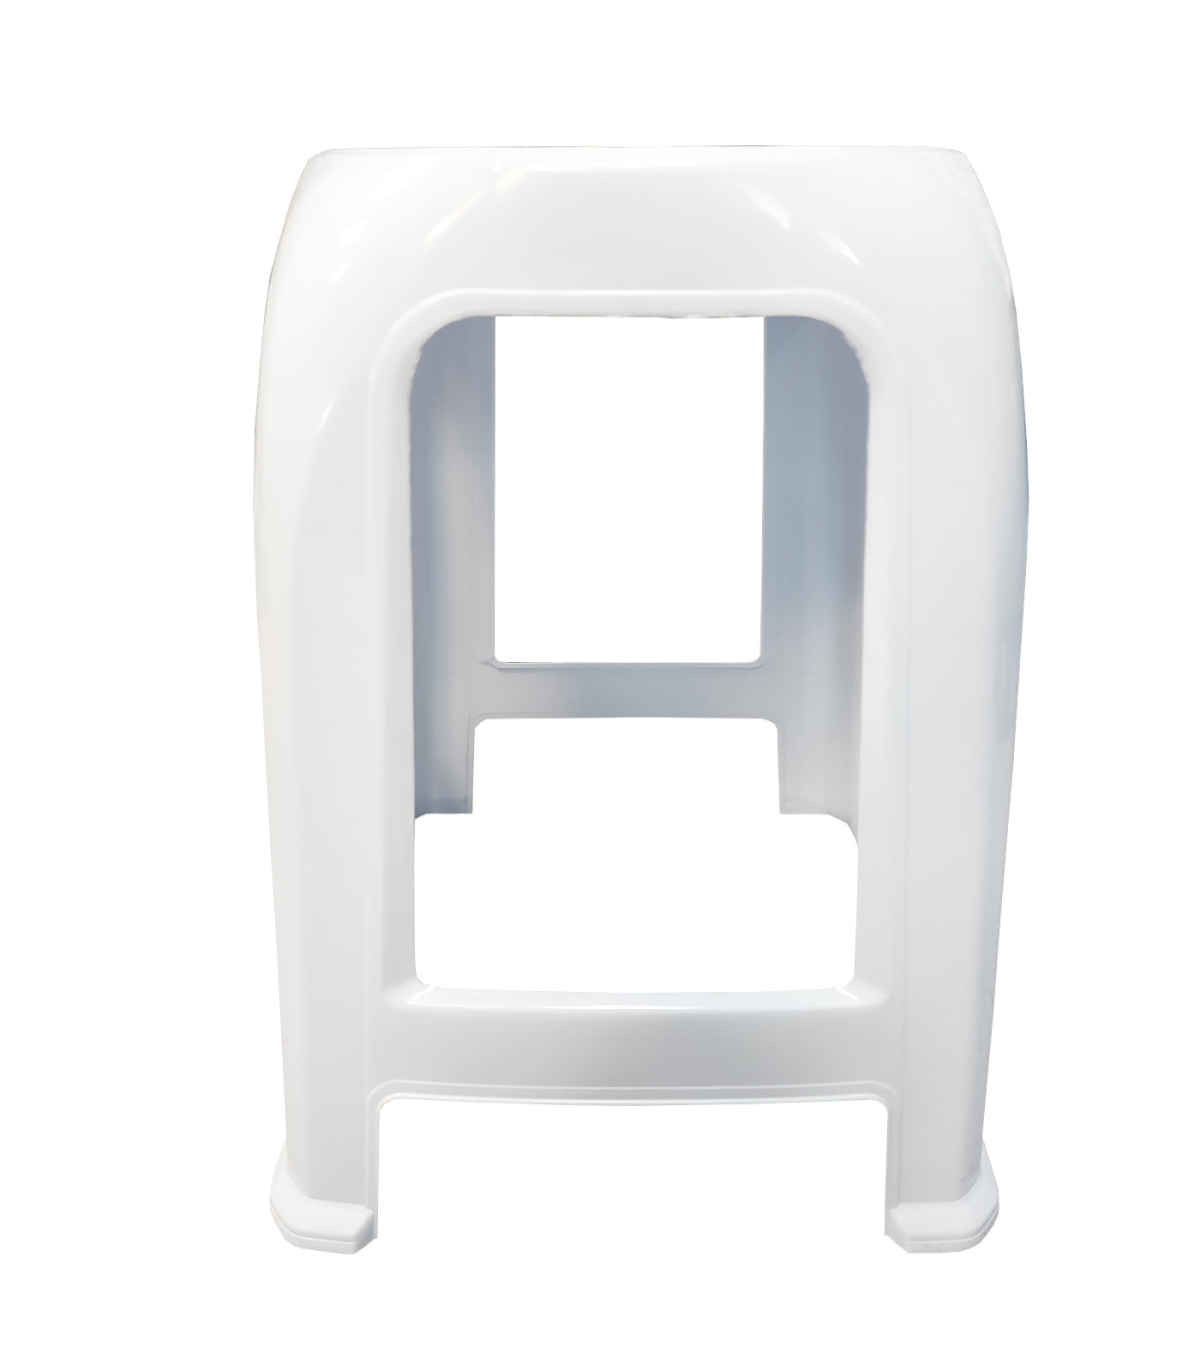 Tradineur - Taburete de plástico con reposapiés, asiento de 26 x 26 cm,  banqueta multiusos, cocina, salón, baño, hogar, fabricad